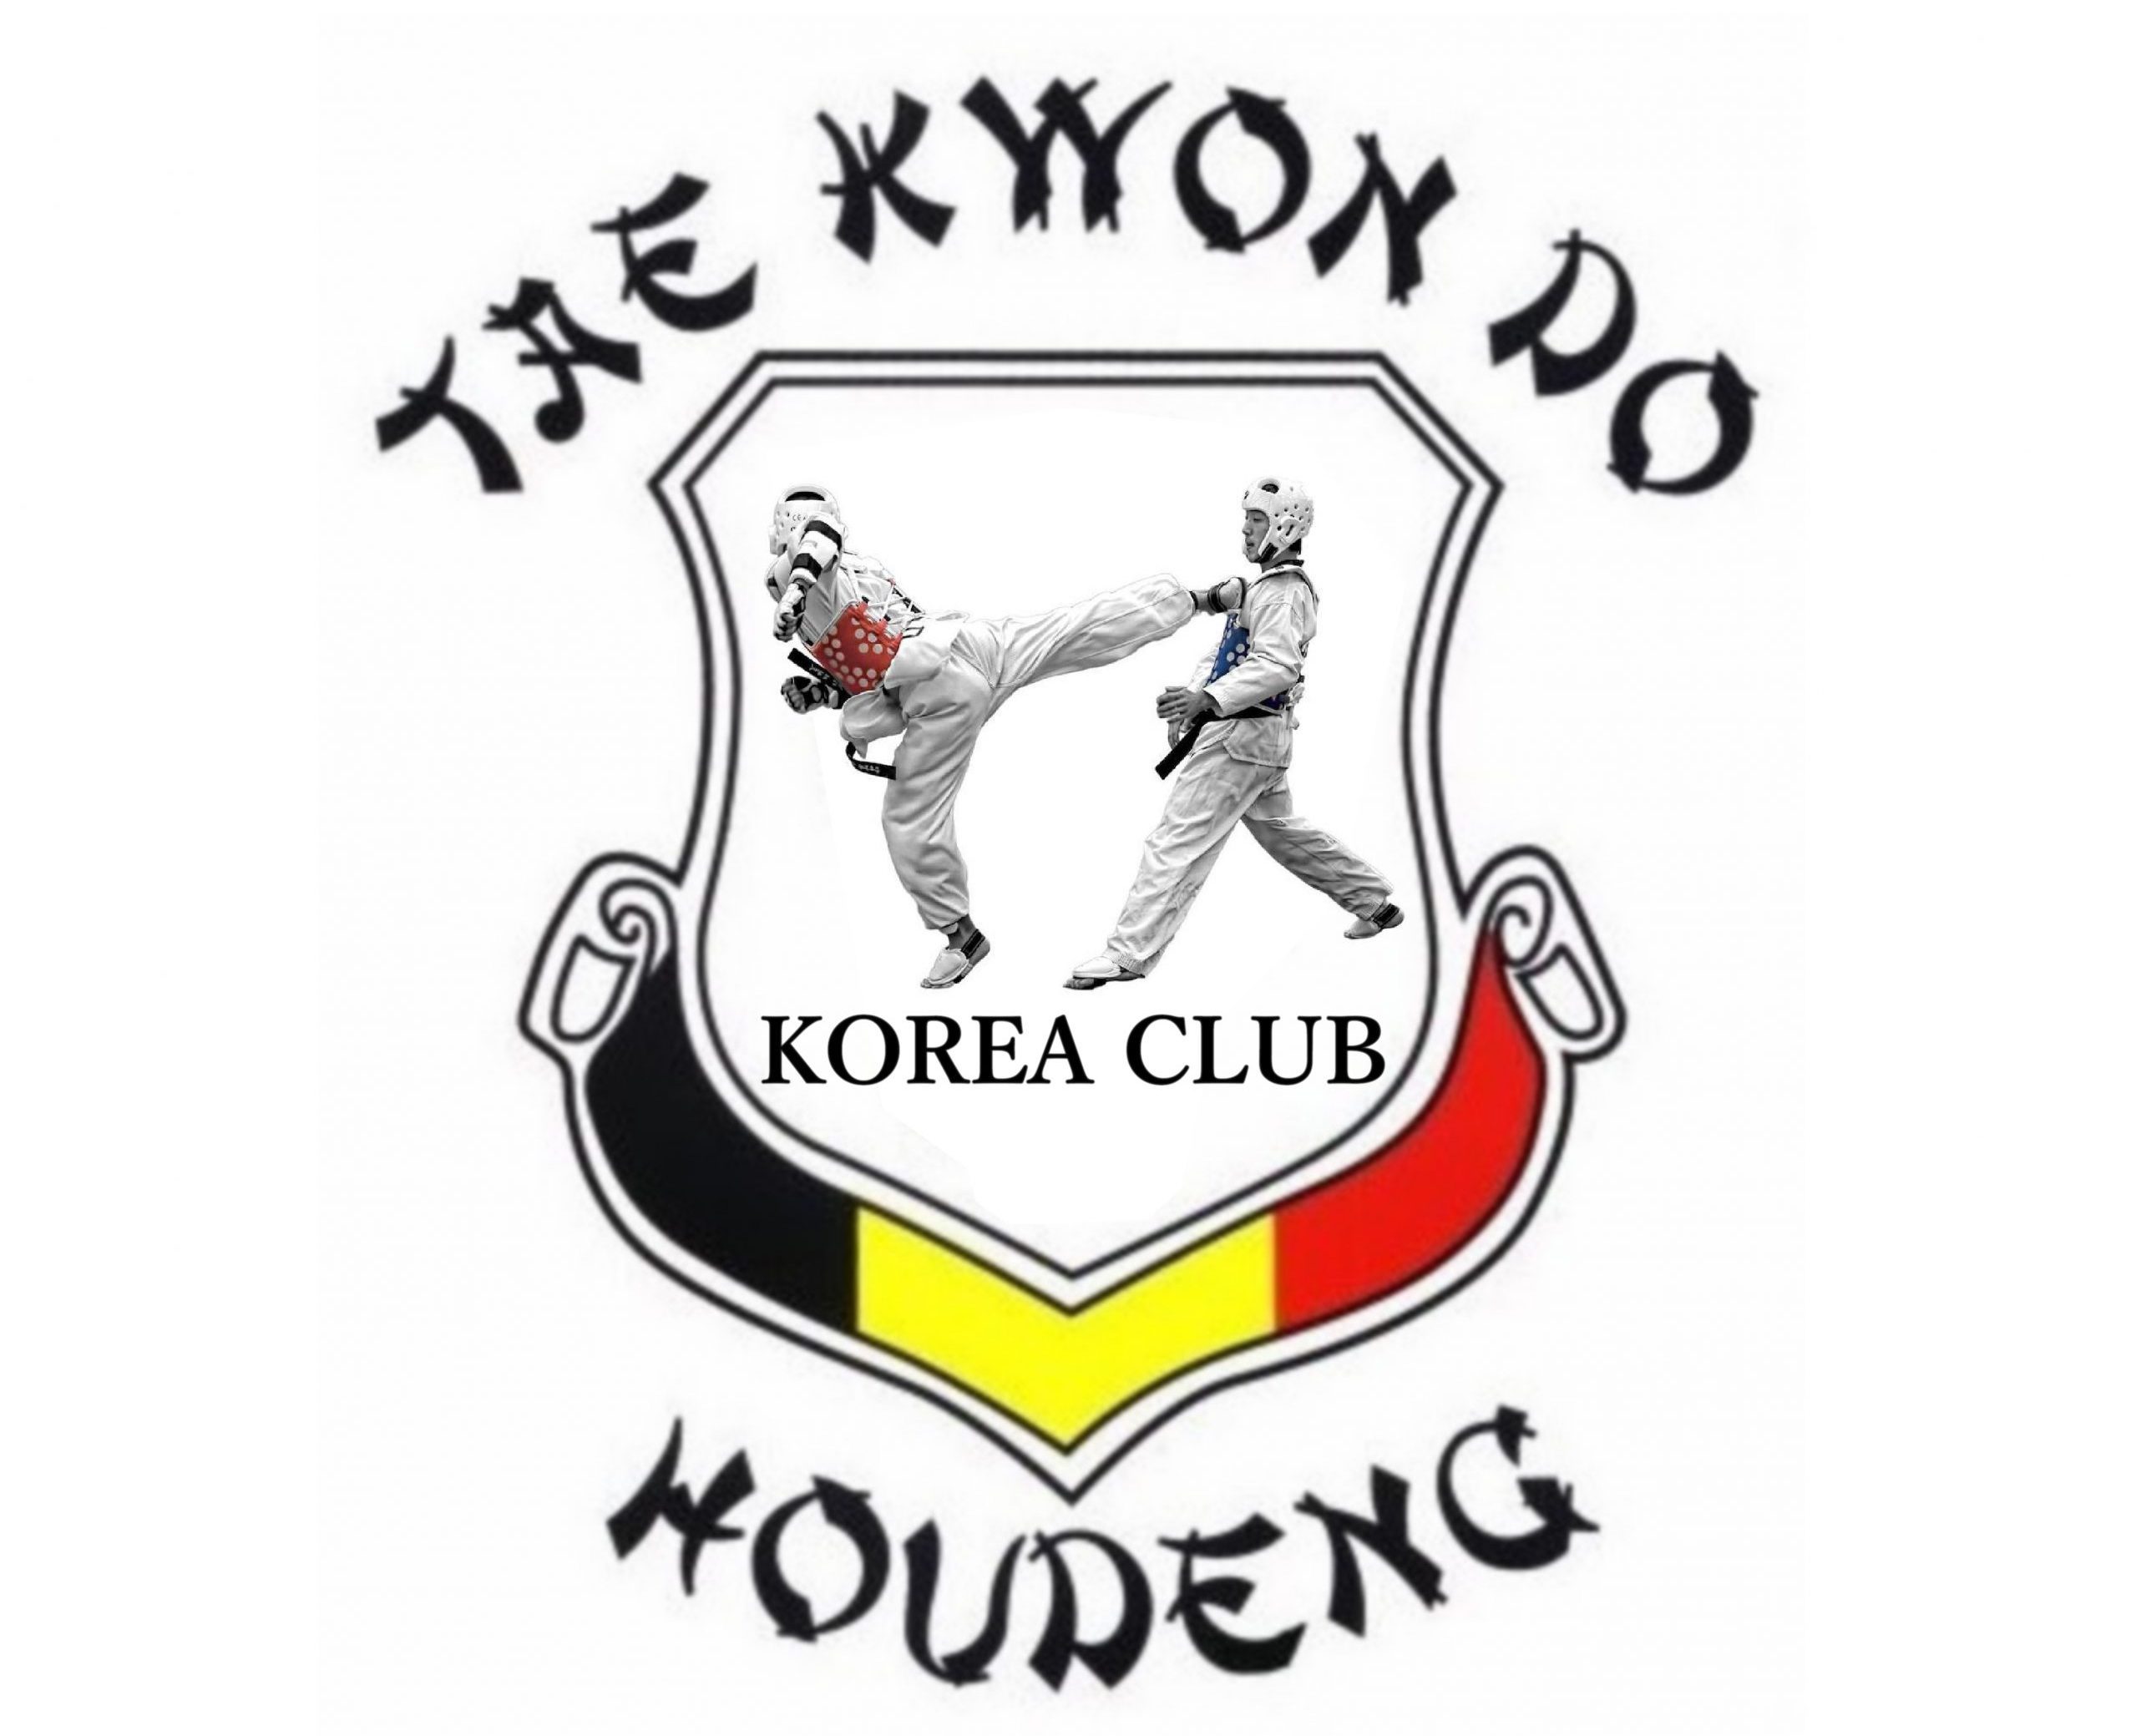 Korea Club Houdeng